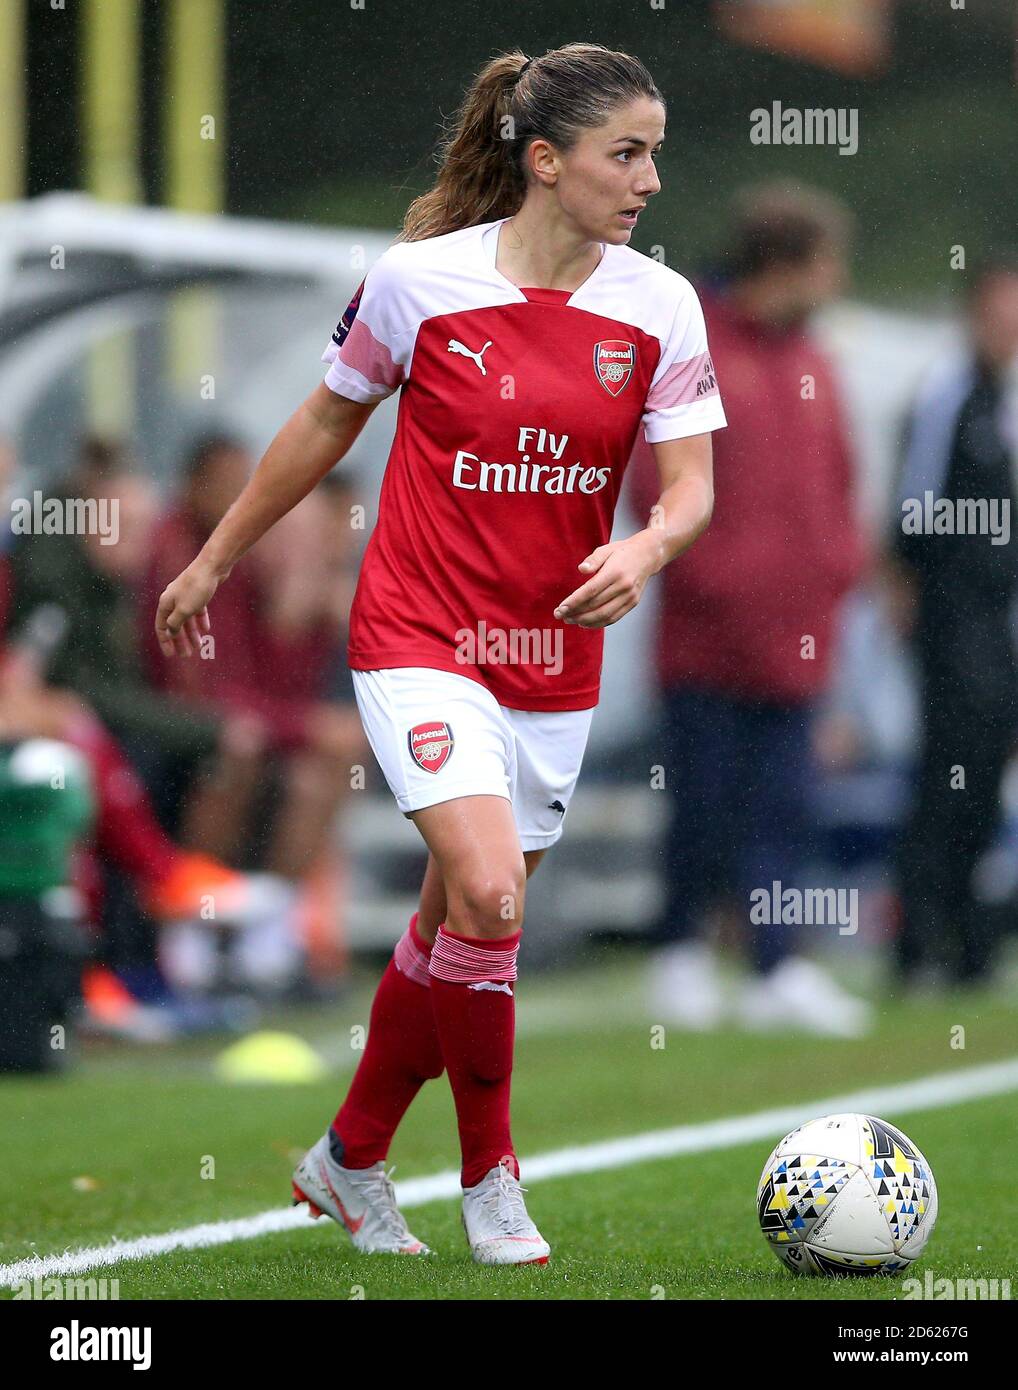 Arsenal Women's Danielle Van de Donk during the match Stock Photo - Alamy